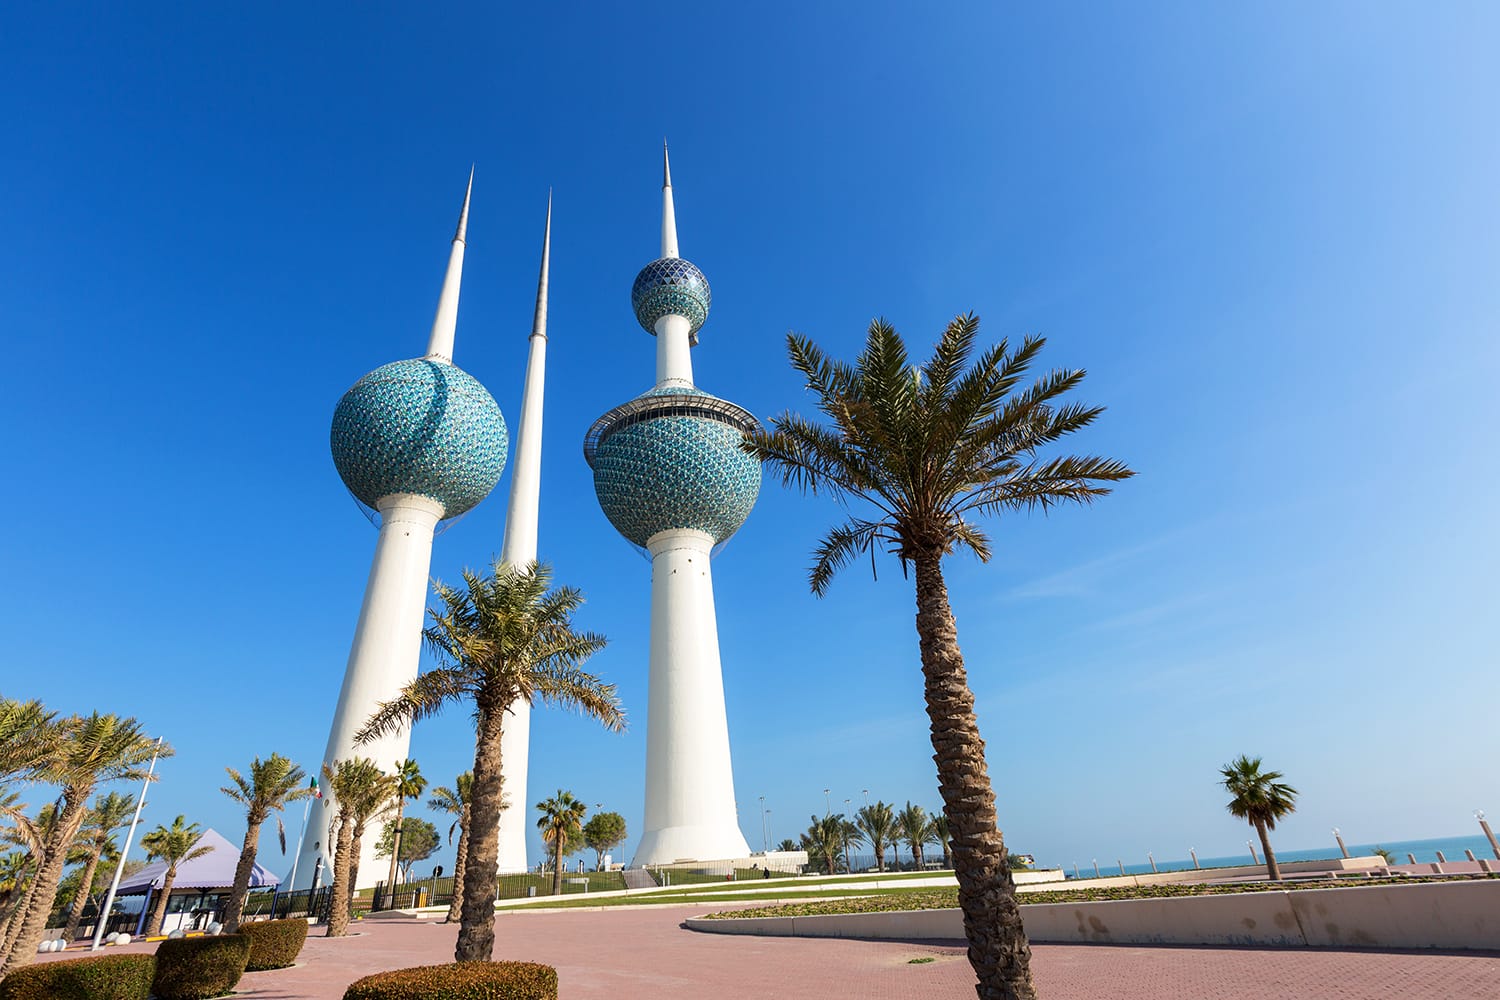 Kuwait Towers and Palms